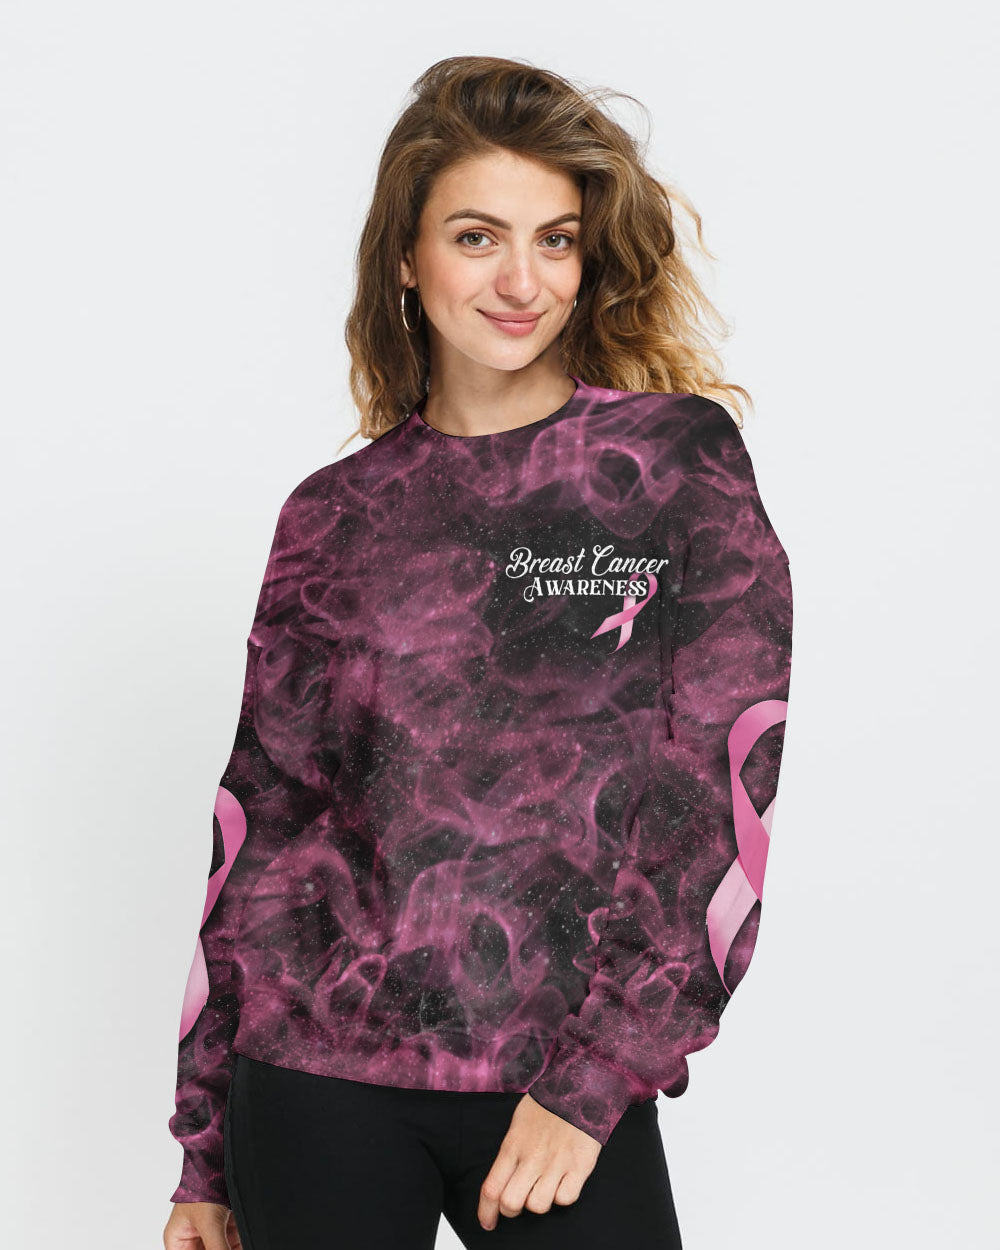 Rose Dragon Women's Breast Cancer Awareness Sweatshirt